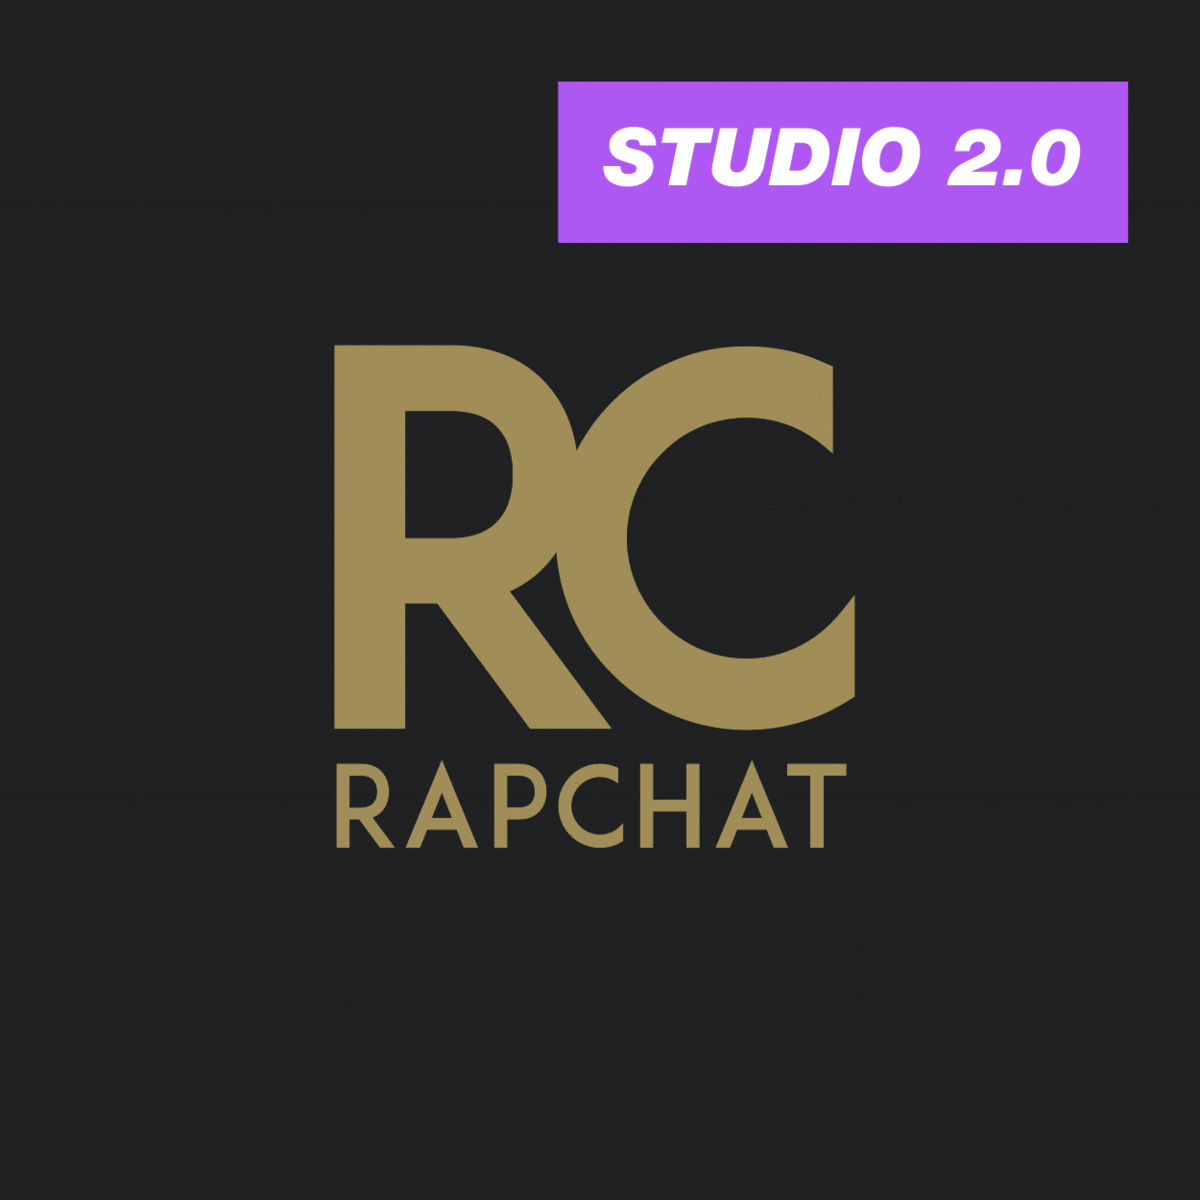 Rapchat Studio 2.0 - Record raps over 